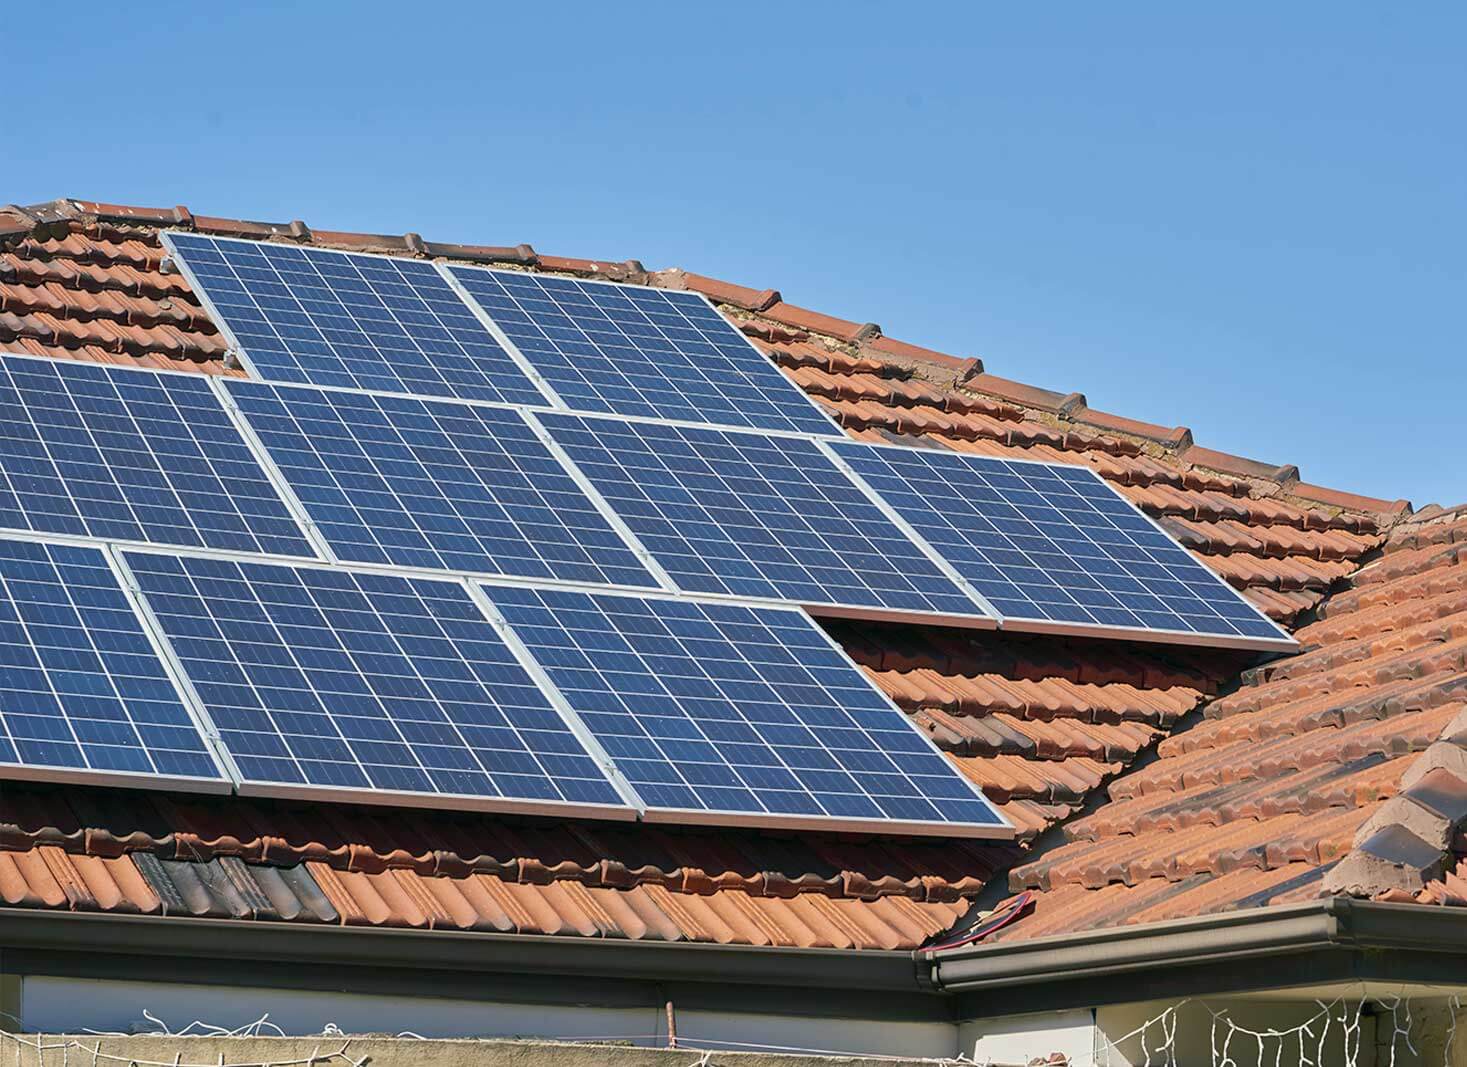 Australian and international solar panels